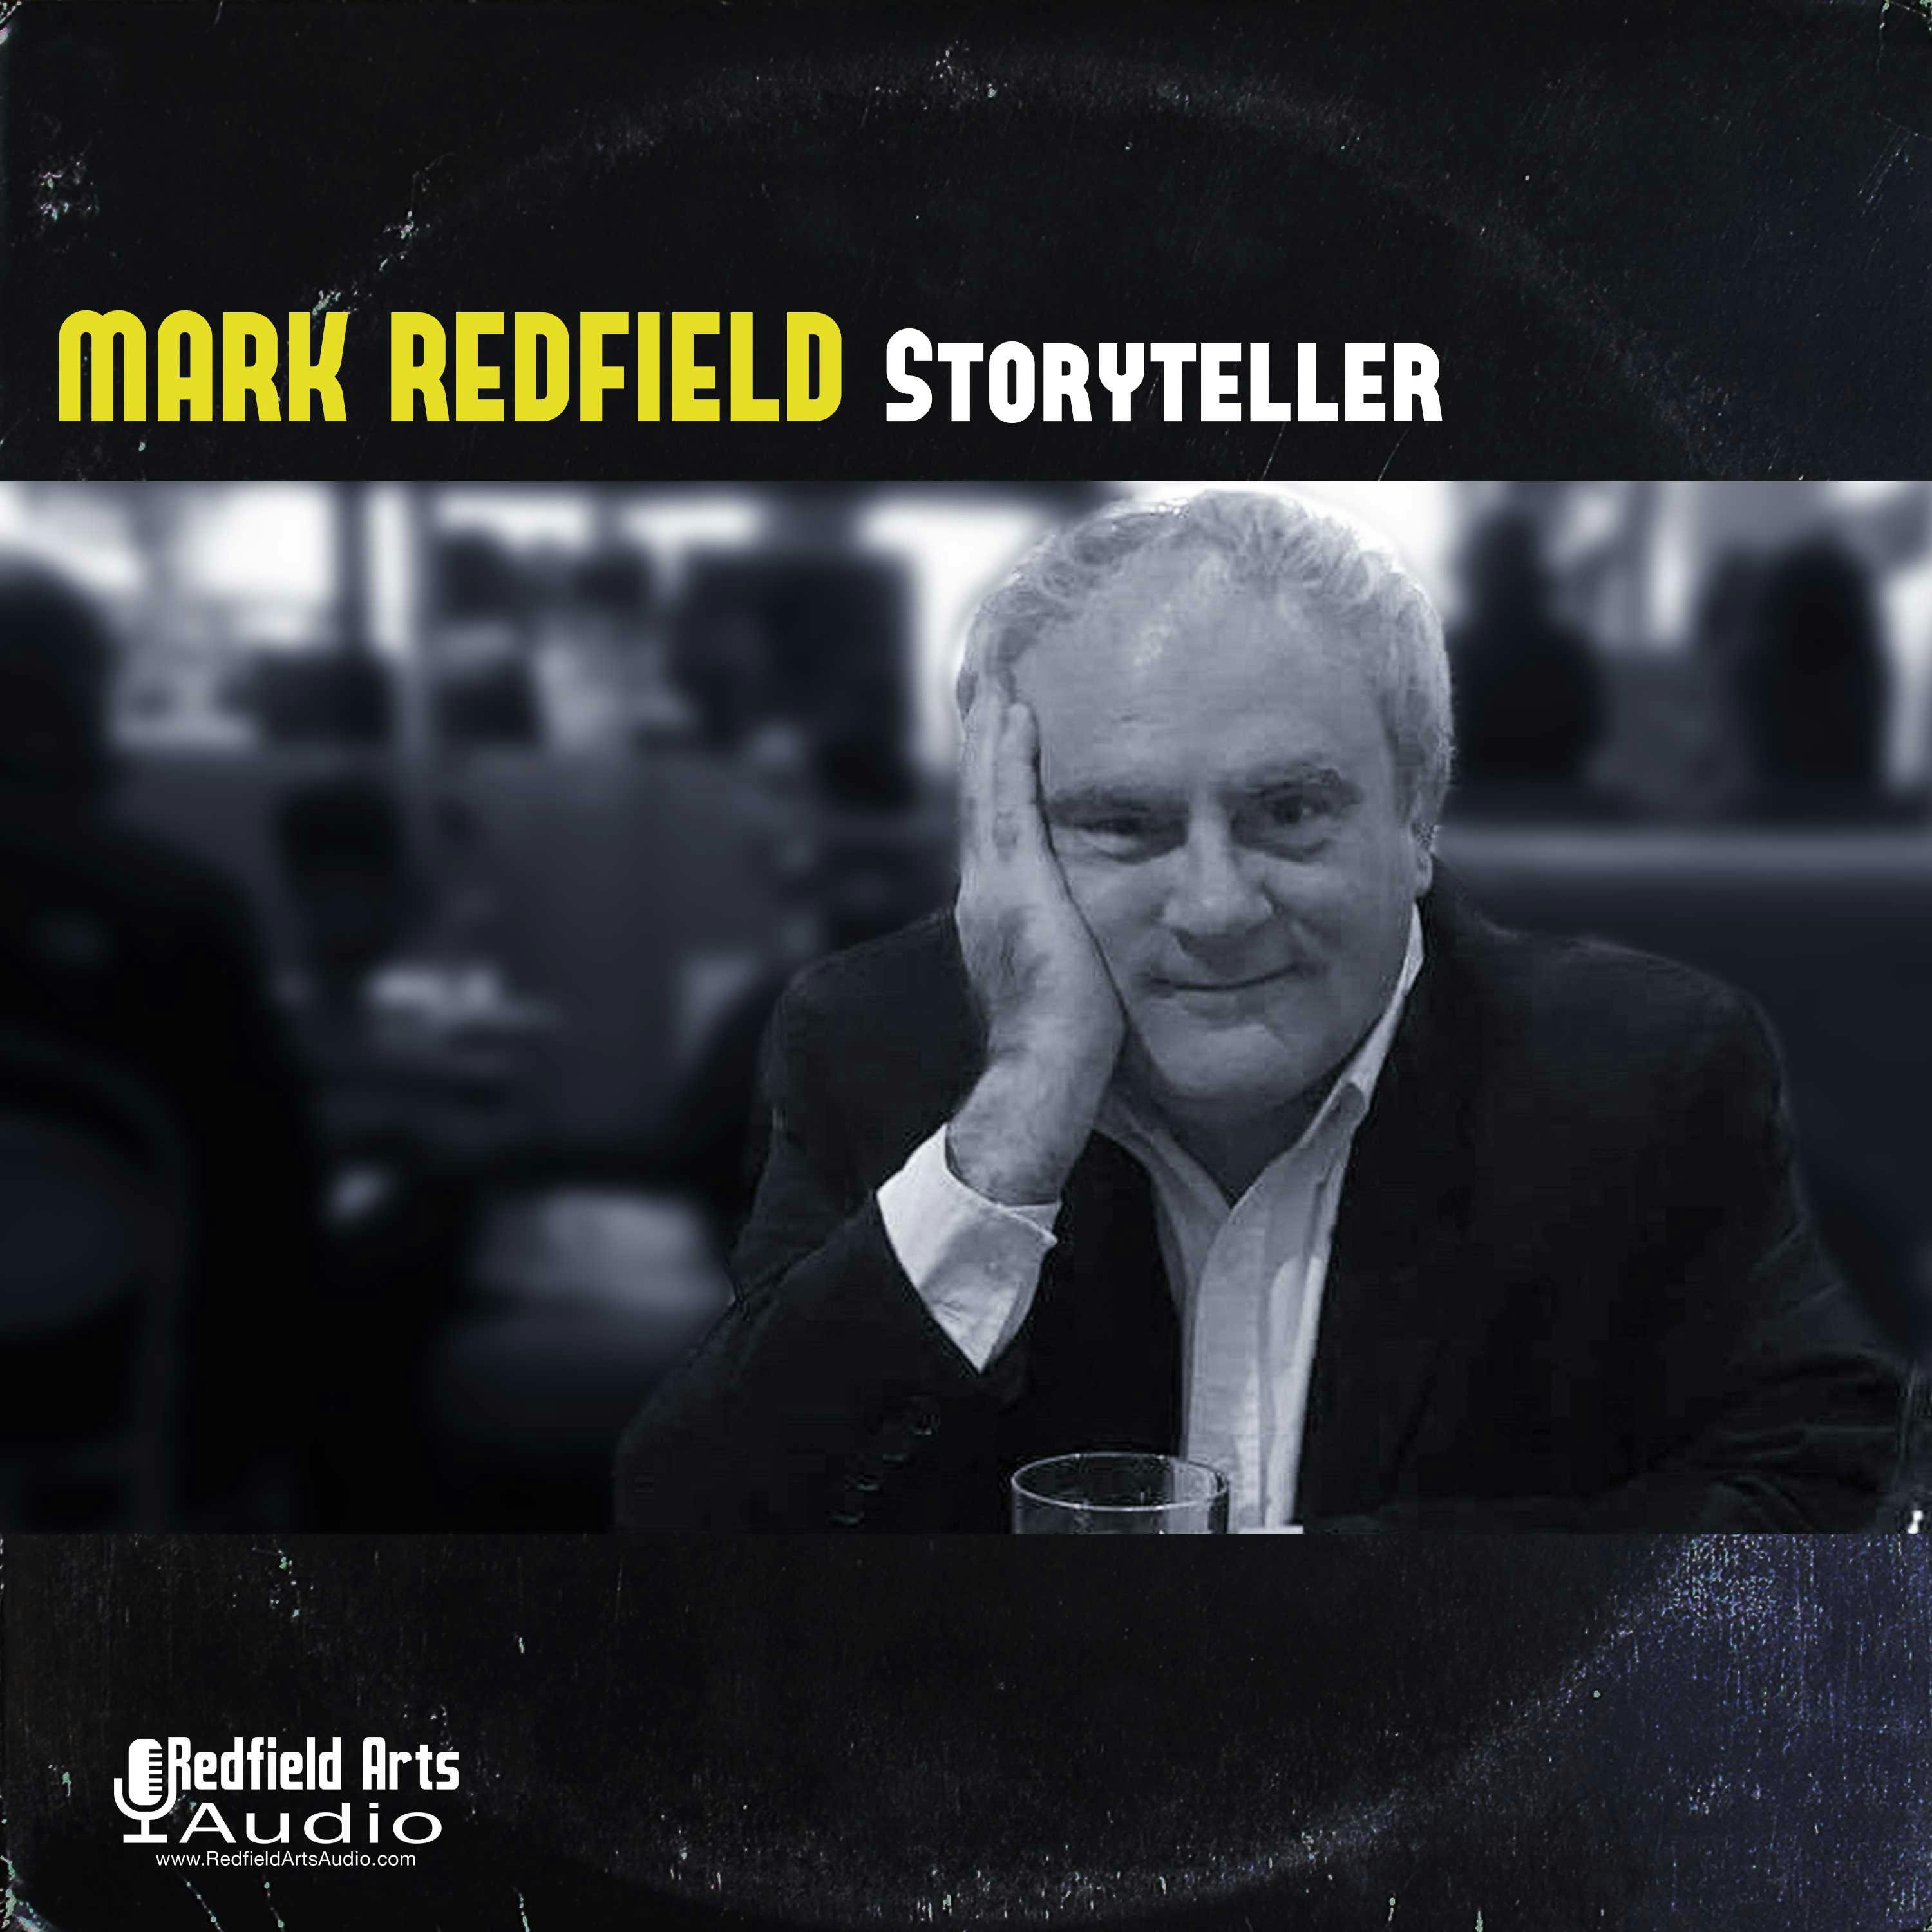 Mark Redfield Storyteller - Ernest Thayer, Alfred Hitchcock, Rudyard Kipling, Lewis Carroll, Mark Twain, Edgar Allan Poe, Charles Dickens, William Shakespeare